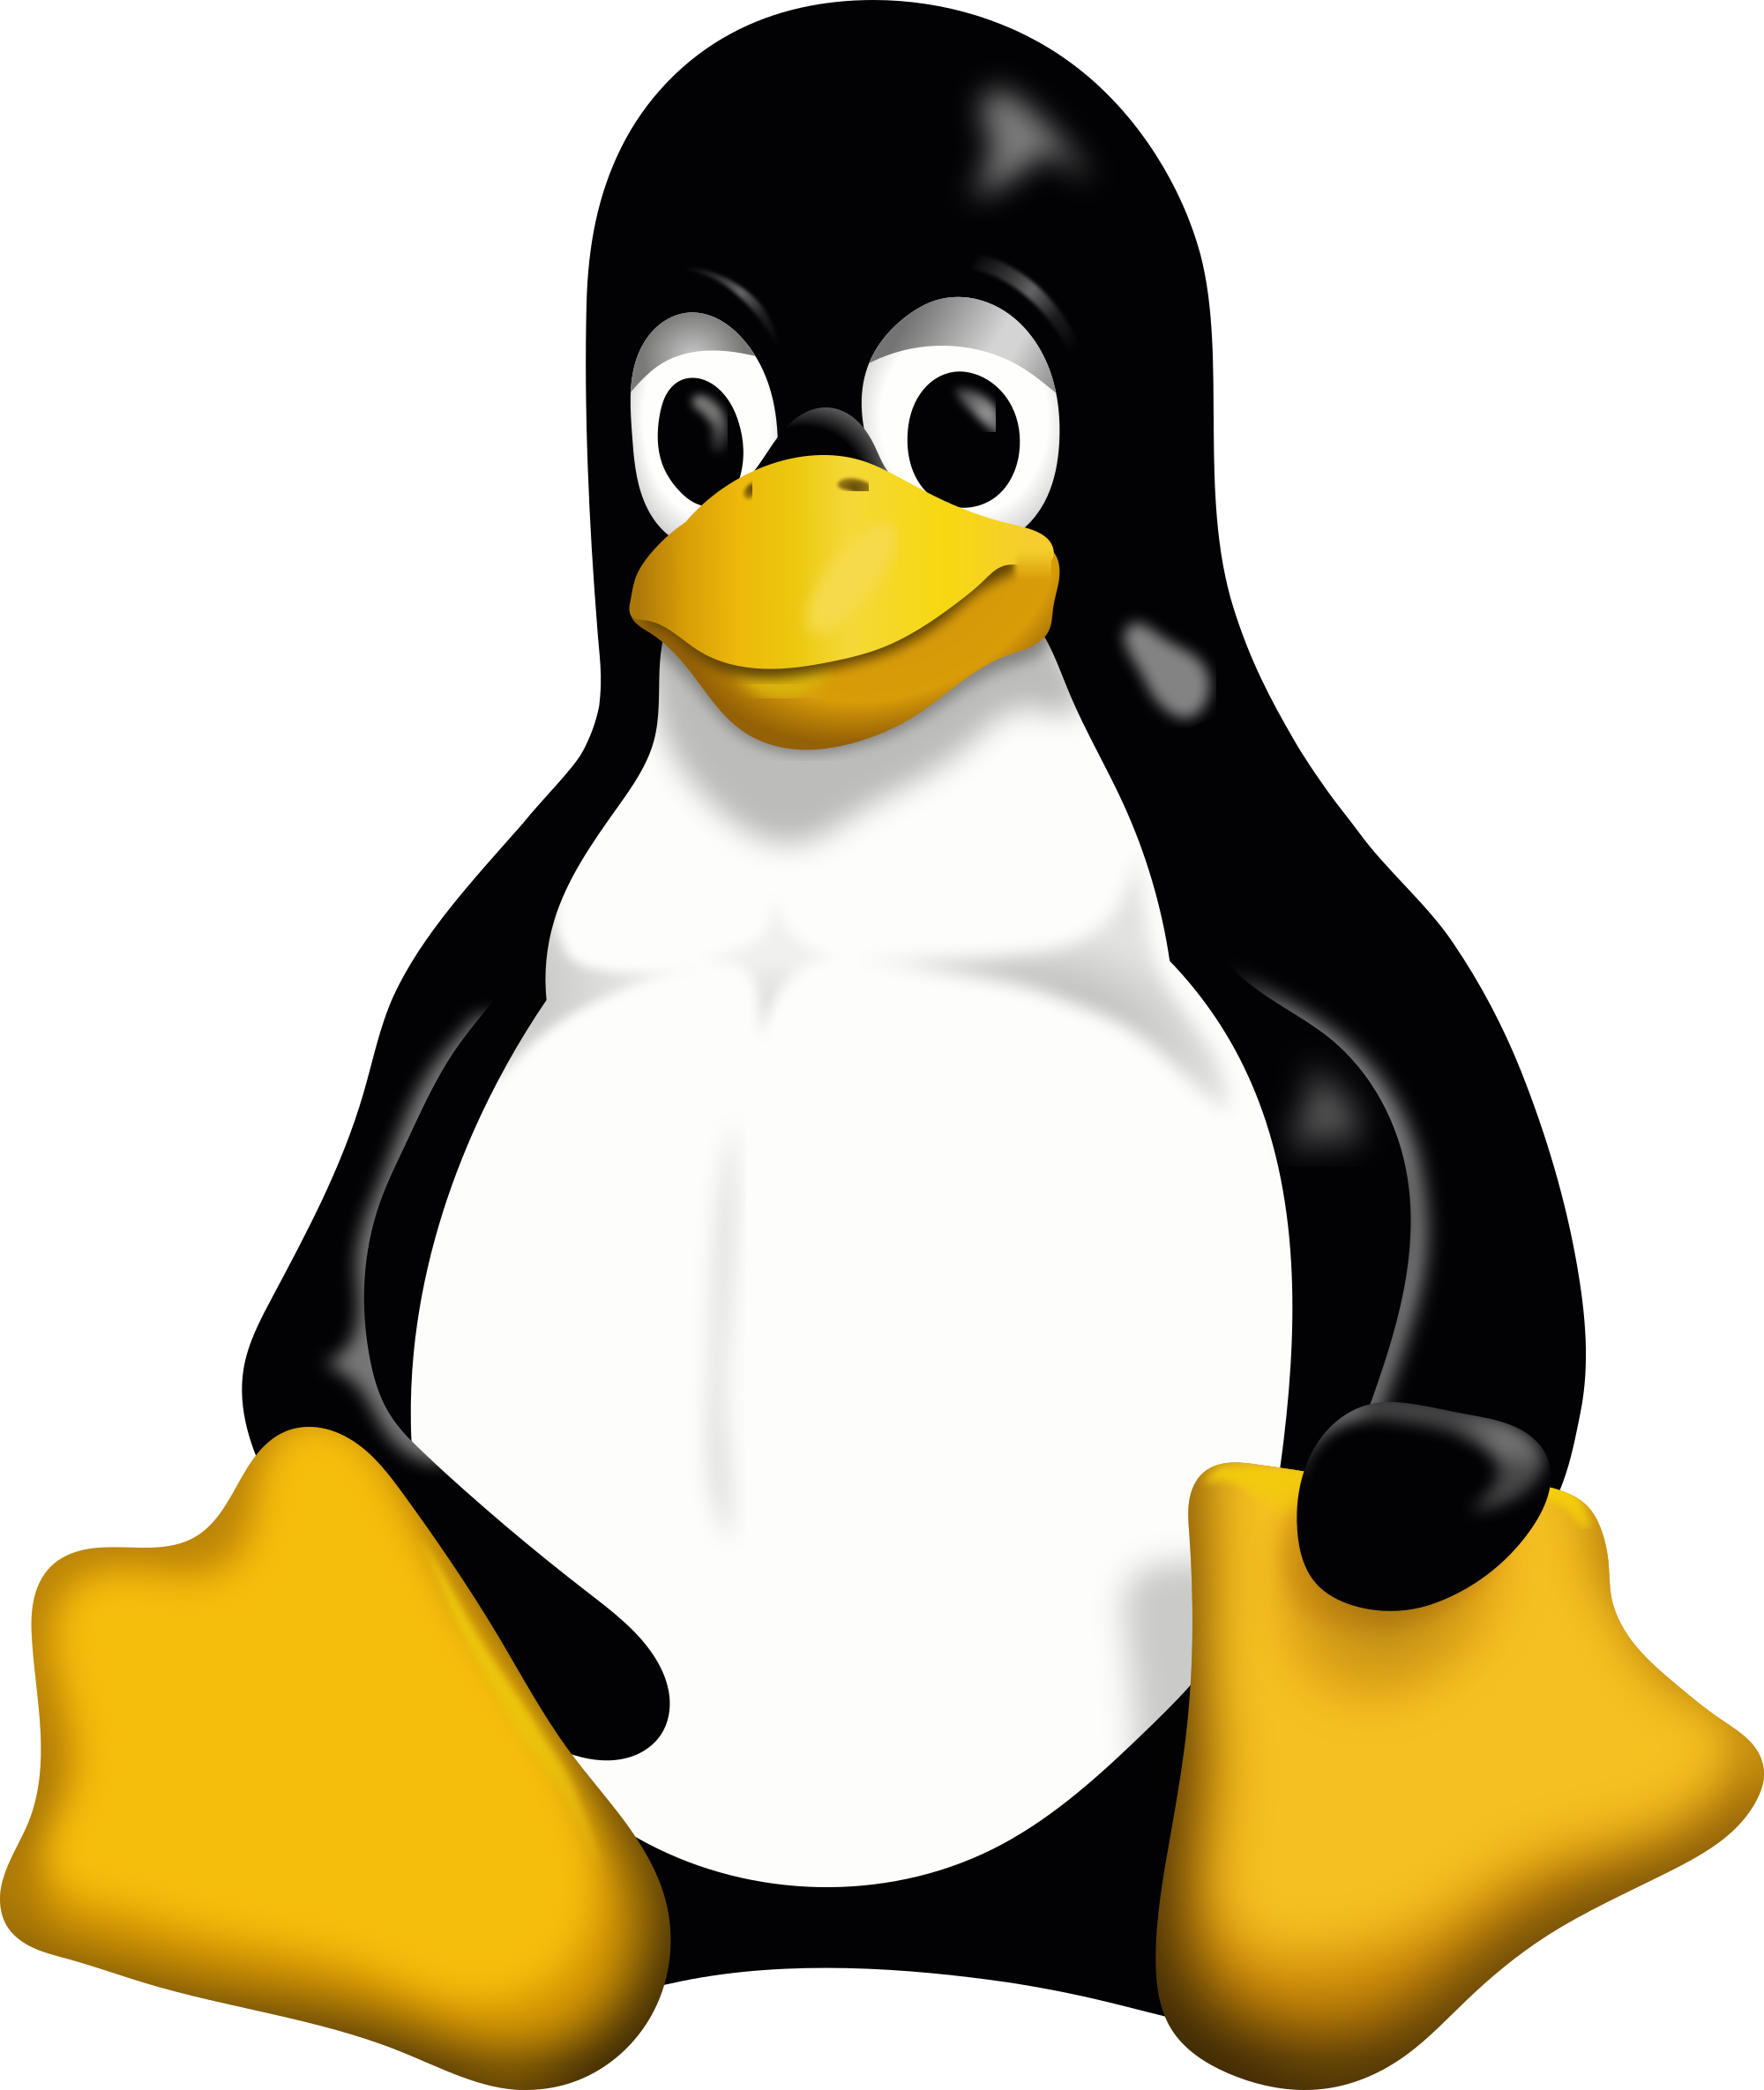 Linux pada awalnya dibuat oleh seorang mahasiswa finlandia bernama